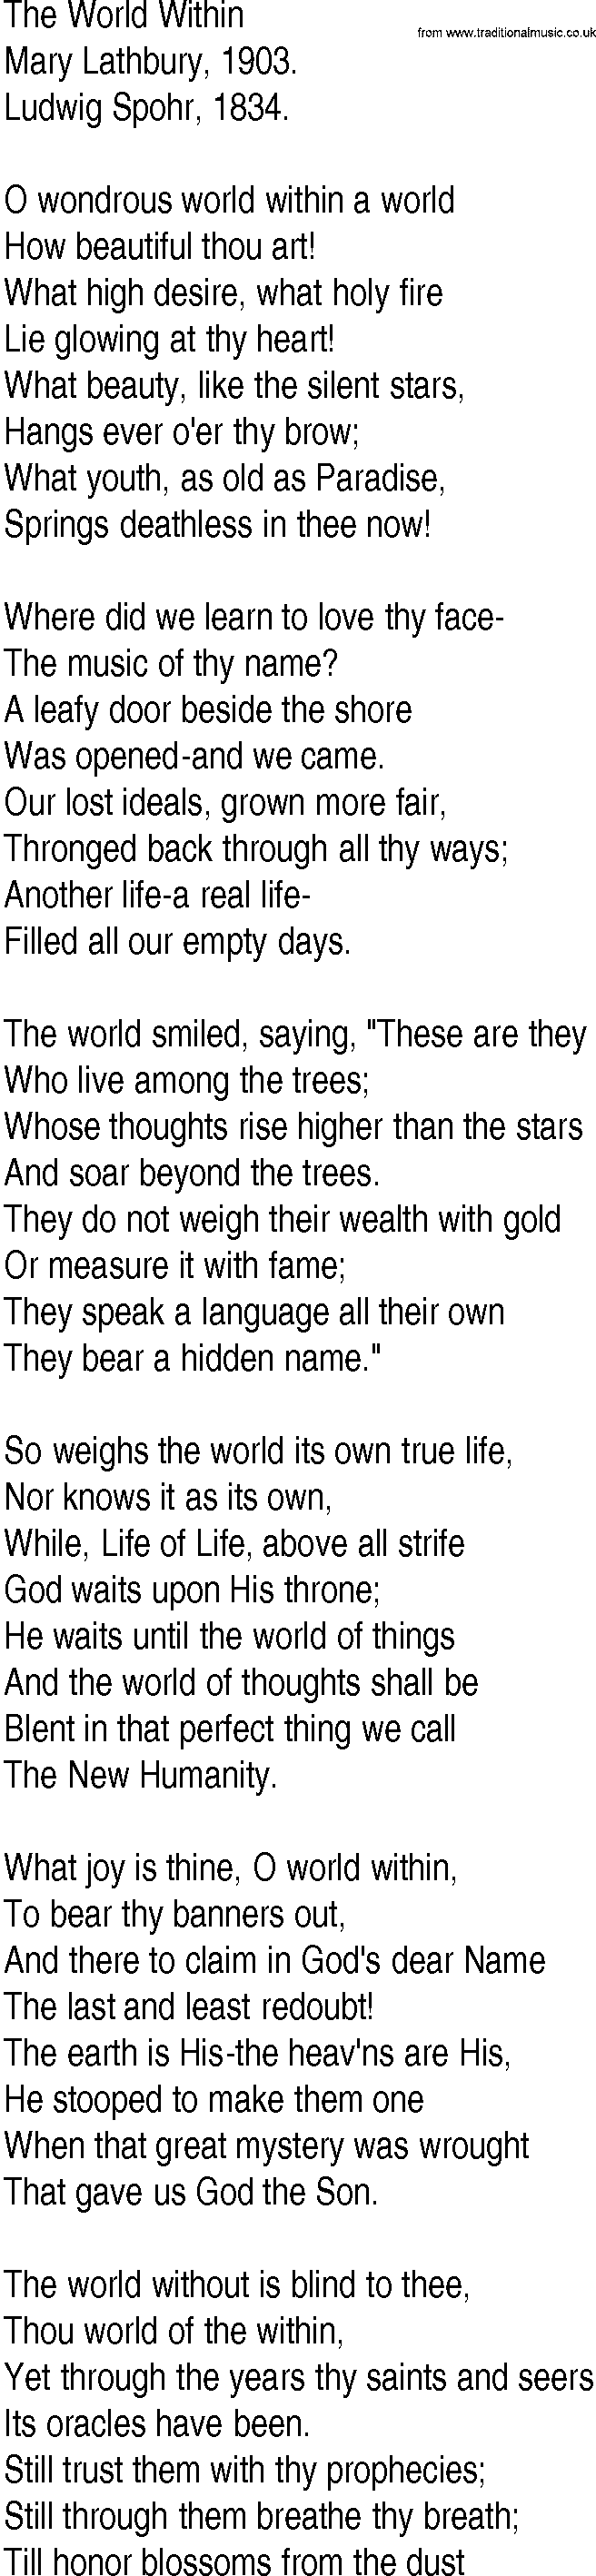 Hymn and Gospel Song: The World Within by Mary Lathbury lyrics